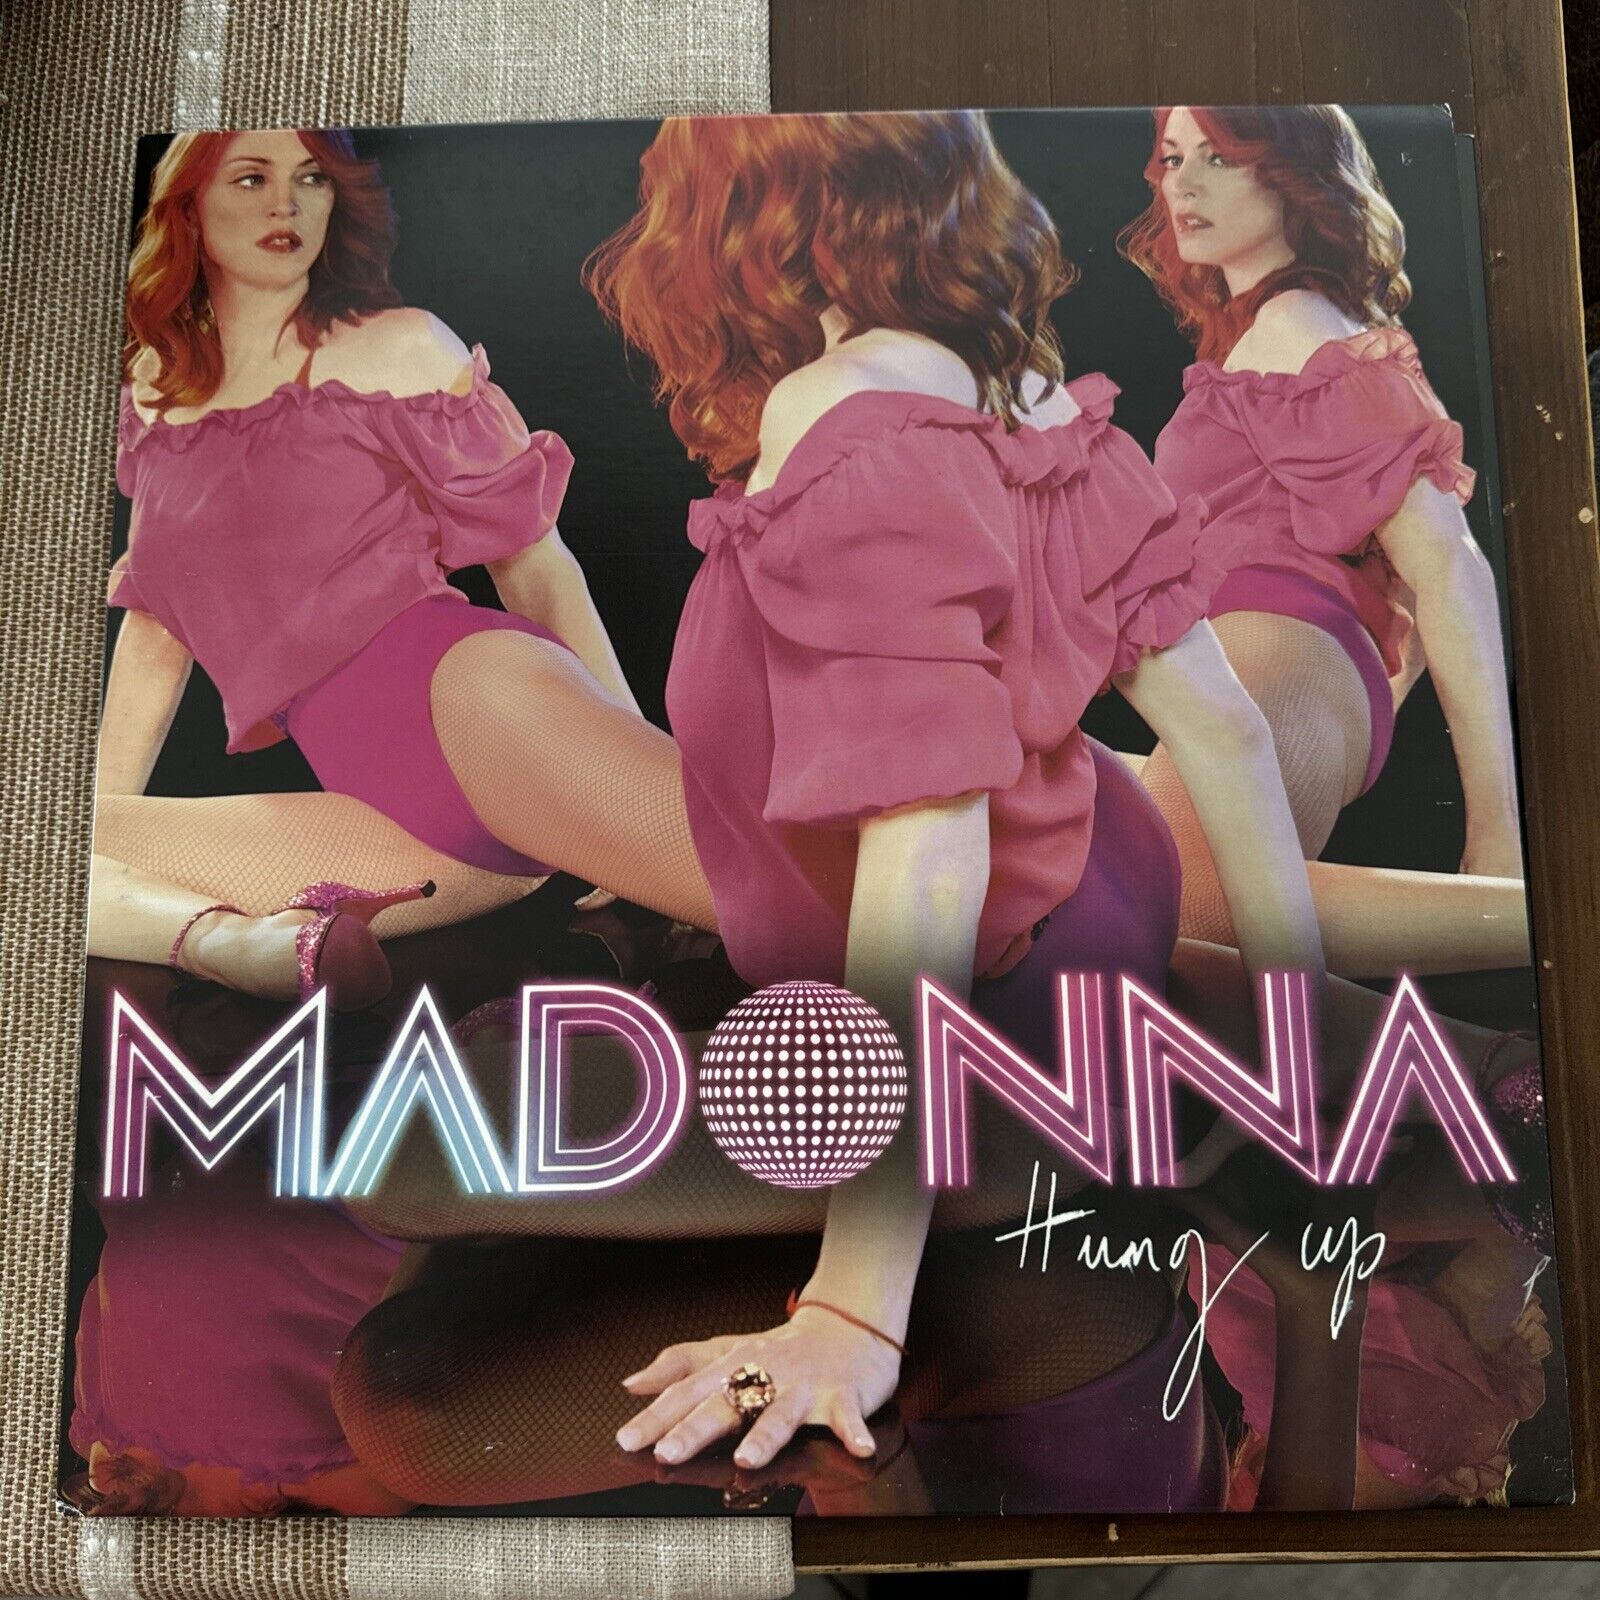 Hung Up [Single] by Madonna (Vinyl, Nov-2005, WEA International ))